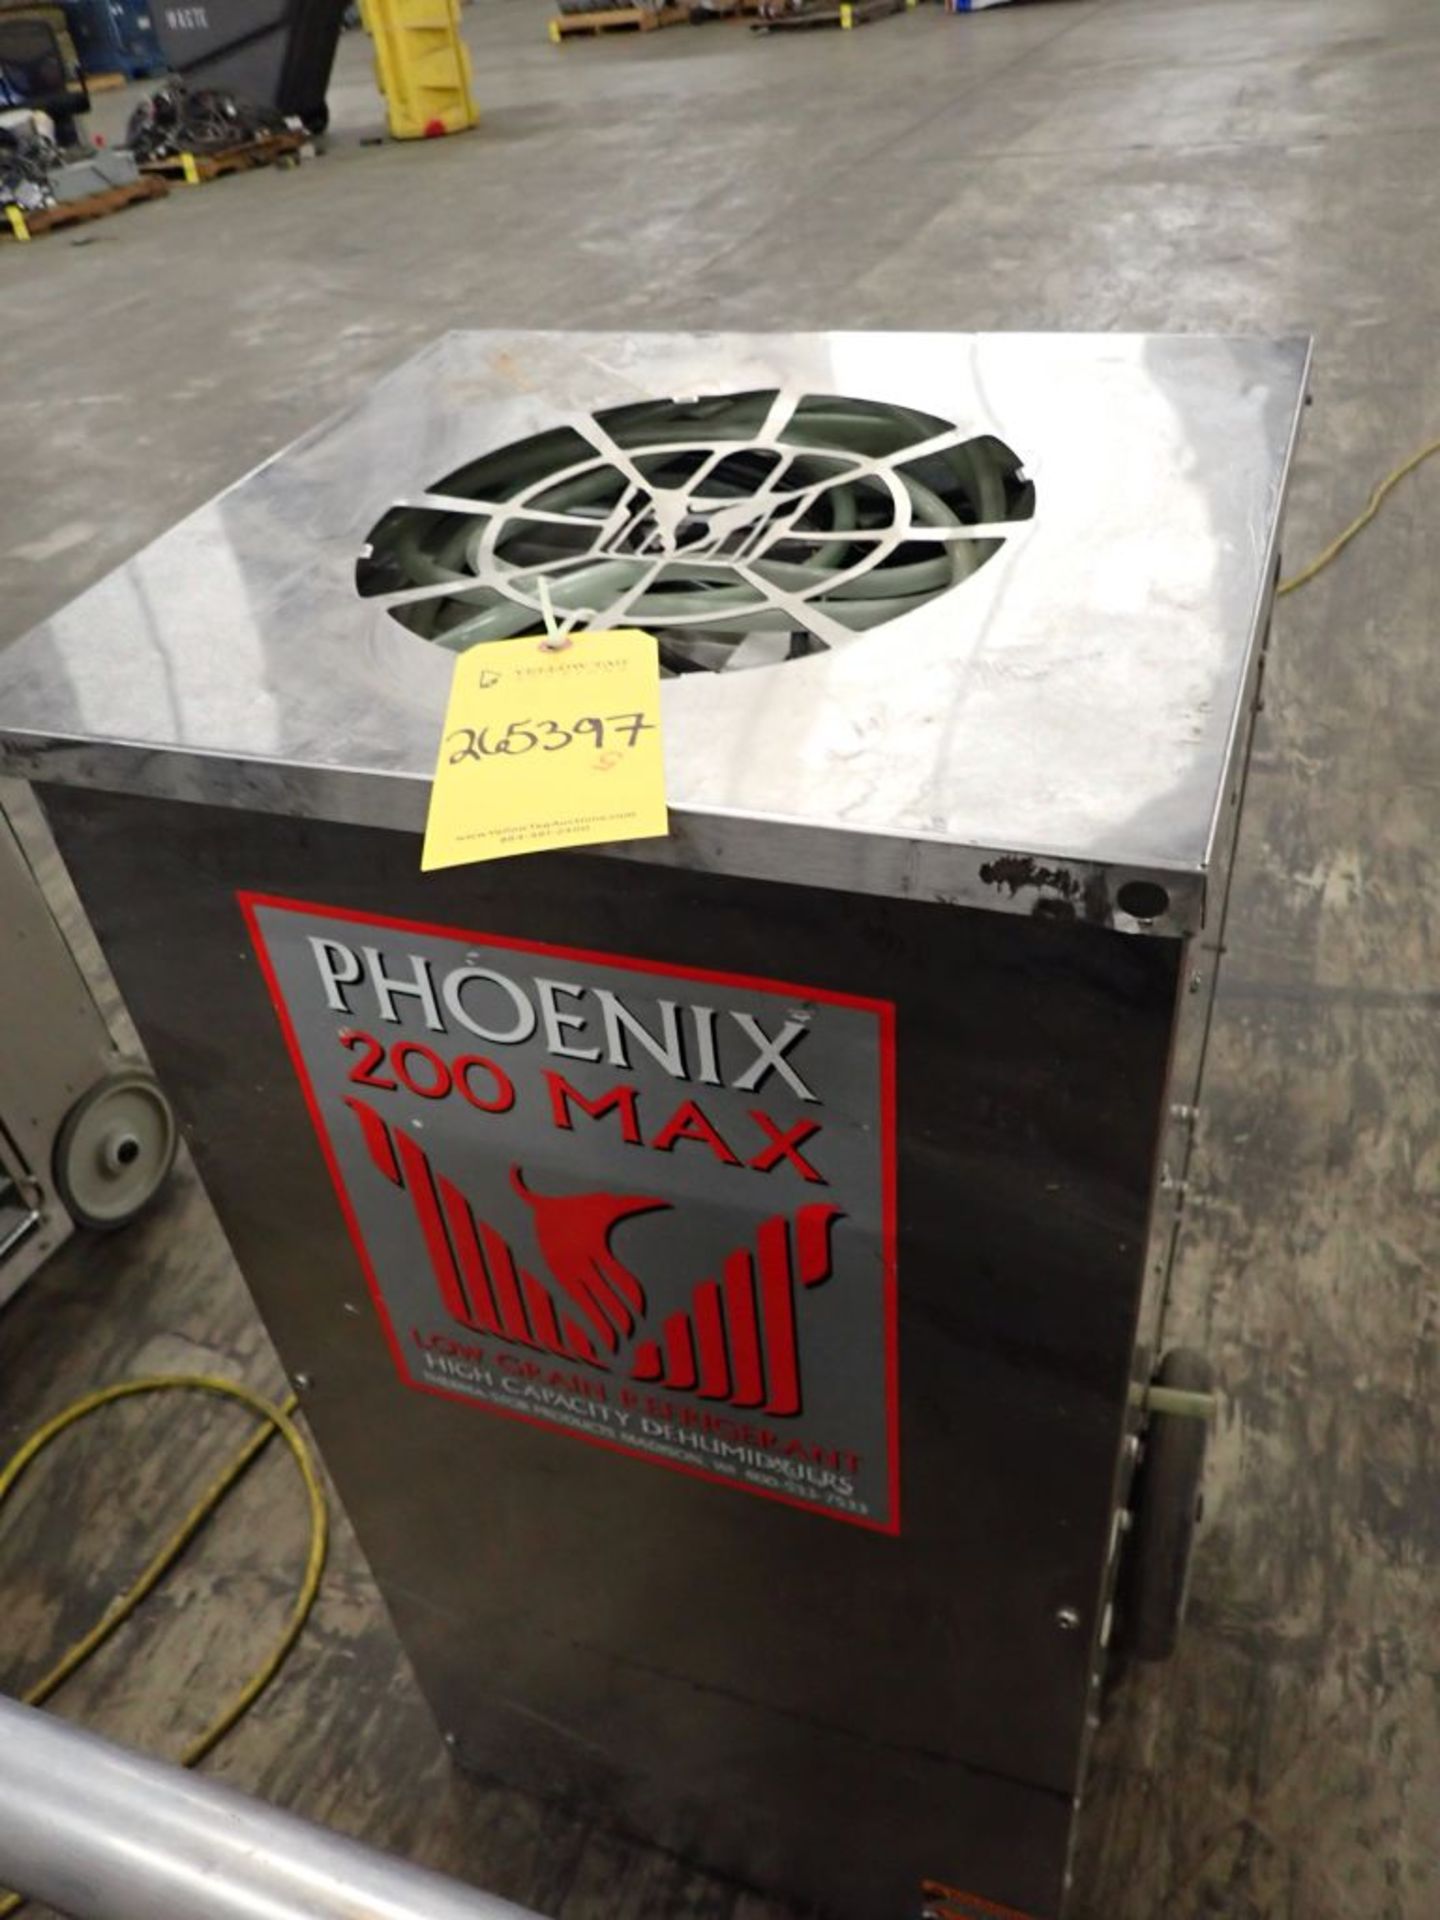 Phoenix 200 Max Low Grain Refrigerant High Capacity Dehumidifier